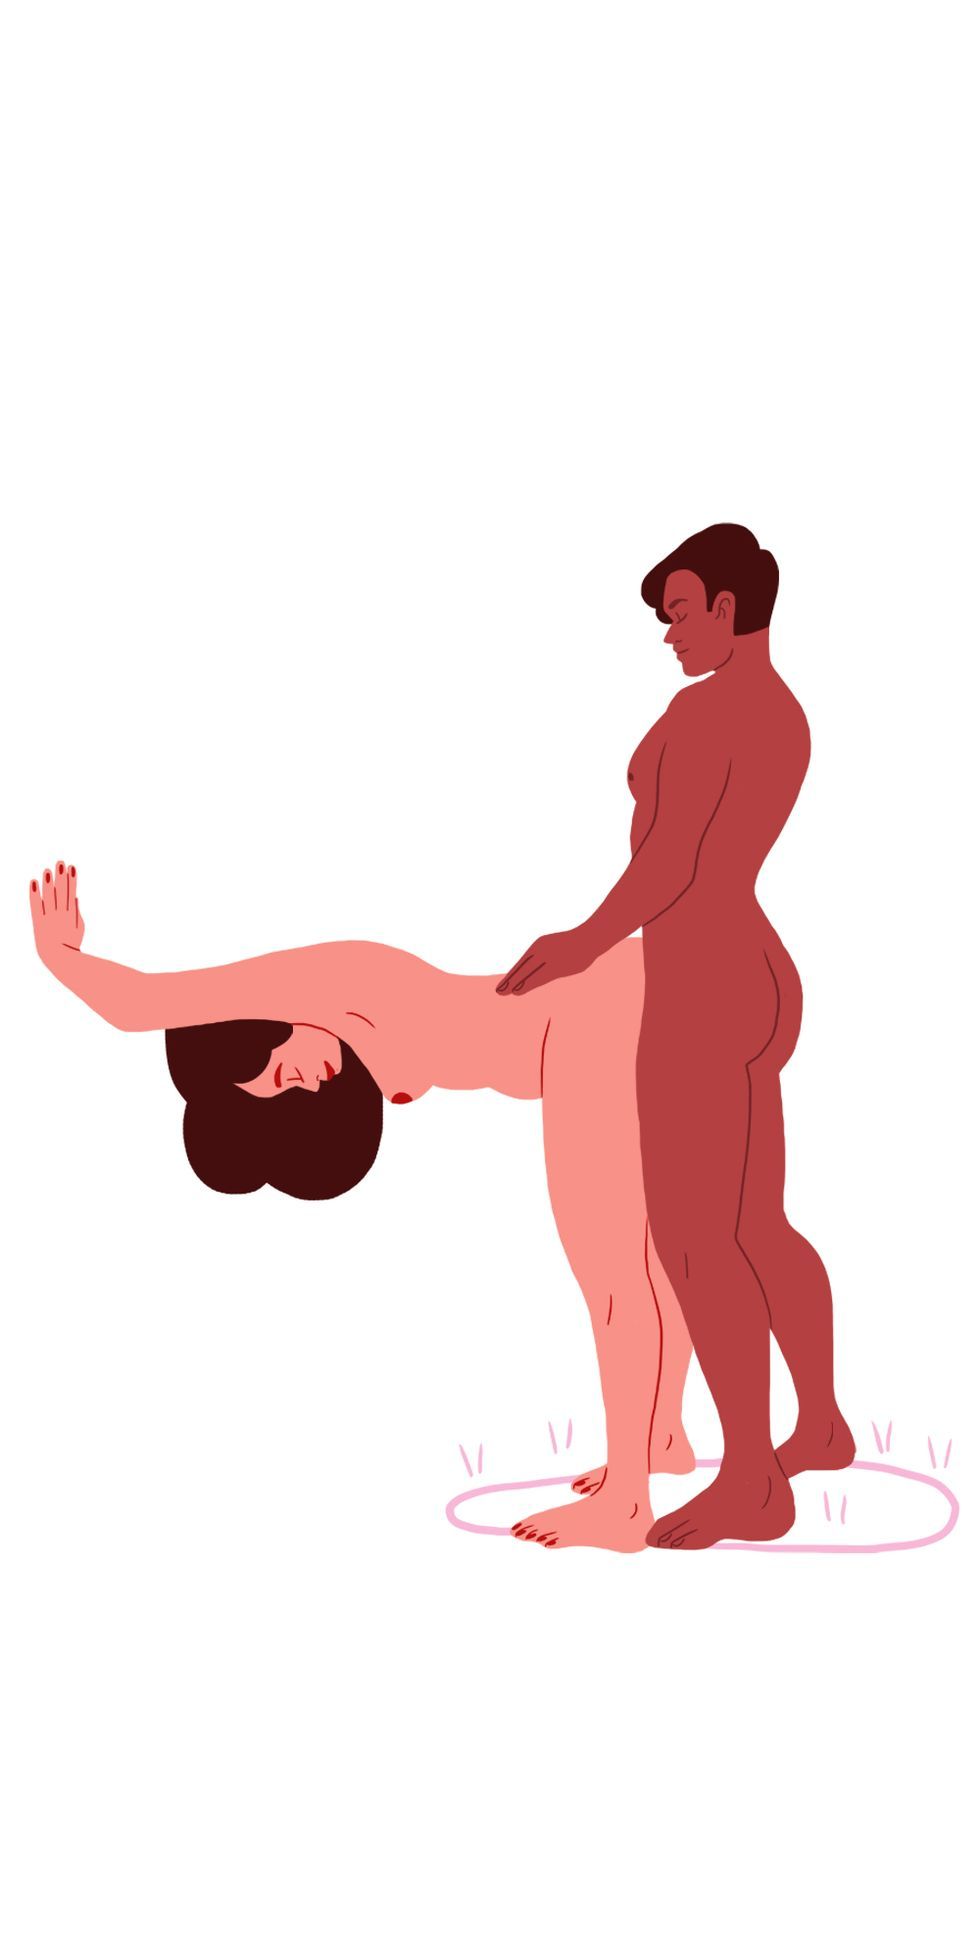 sex positions guide, best sex positions, shower sex positions